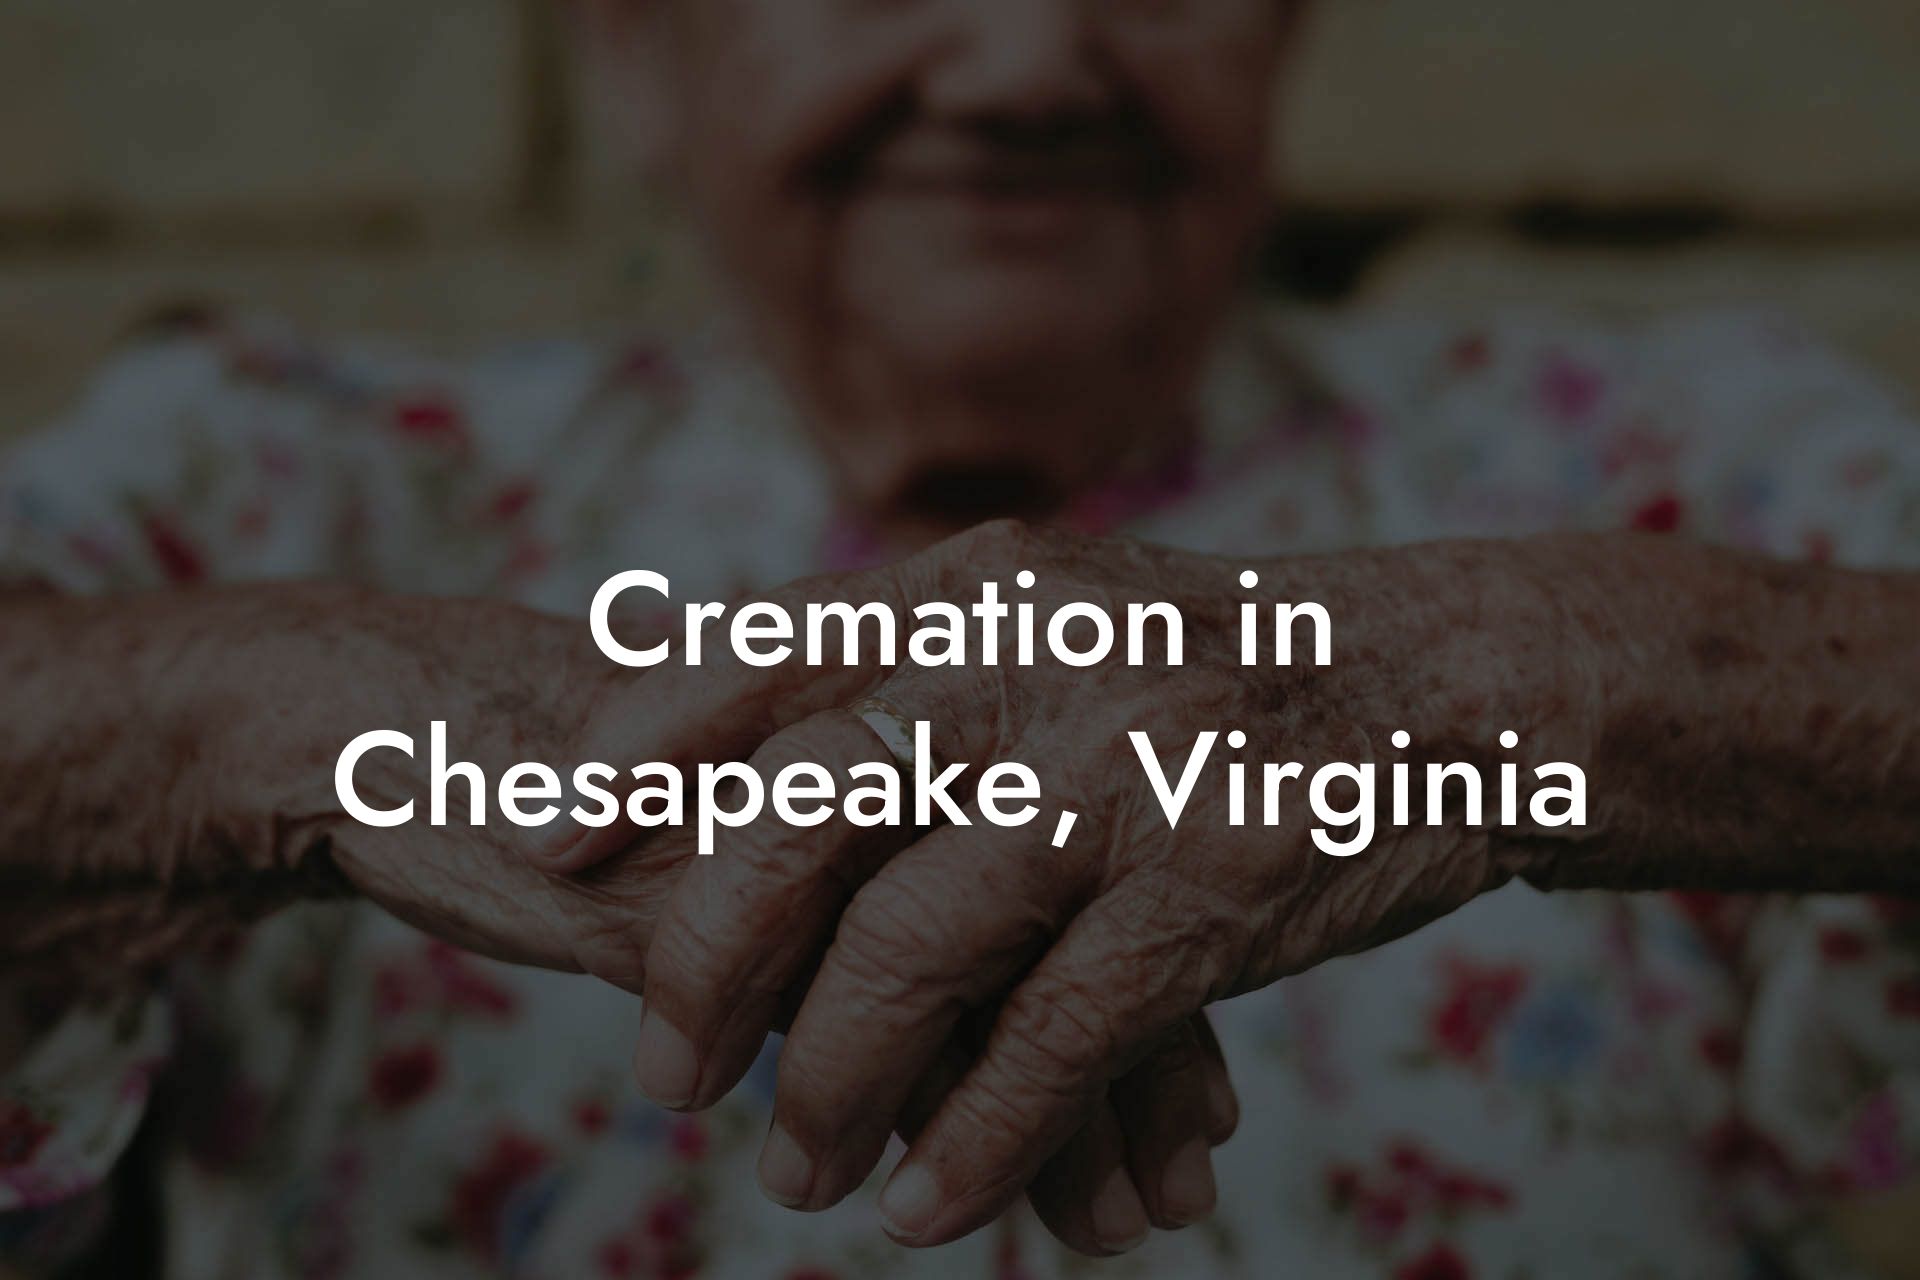 Cremation in Chesapeake, Virginia